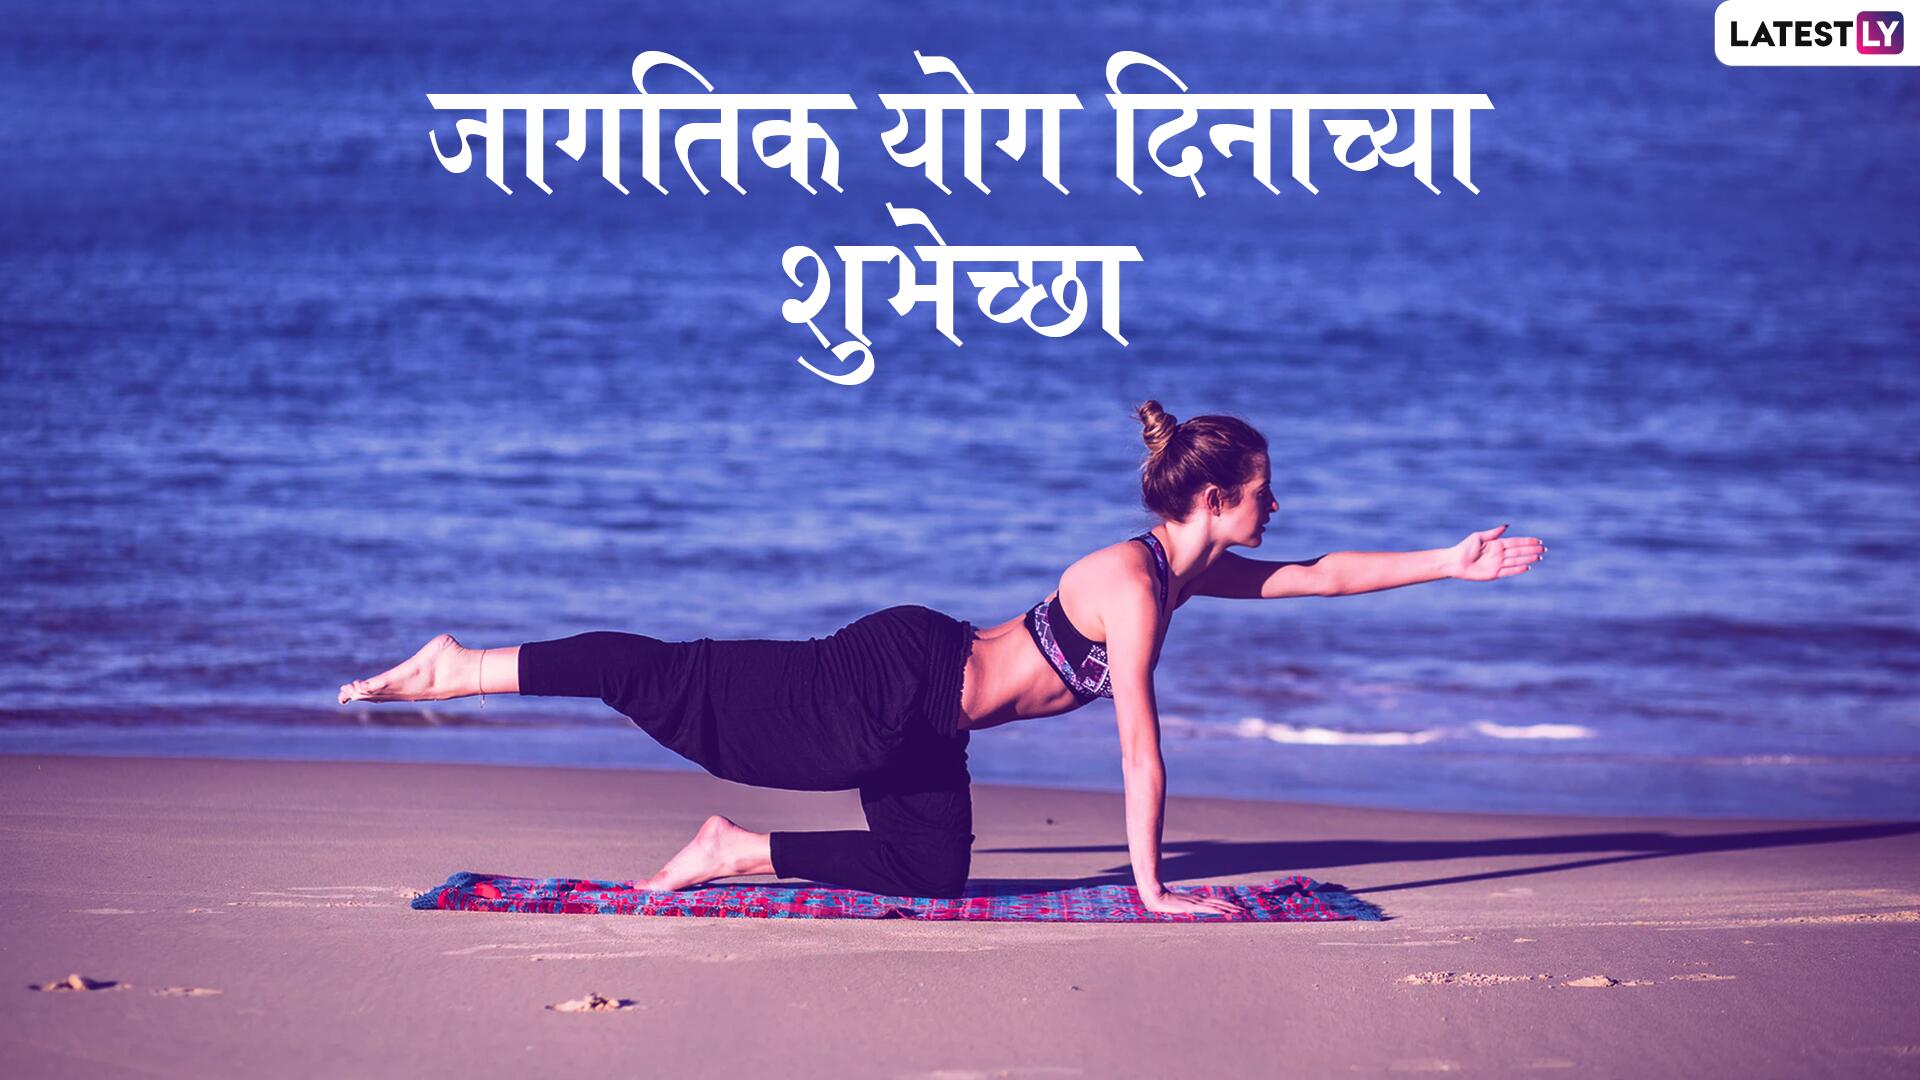 Yoga Day 2019 In Marathi - HD Wallpaper 